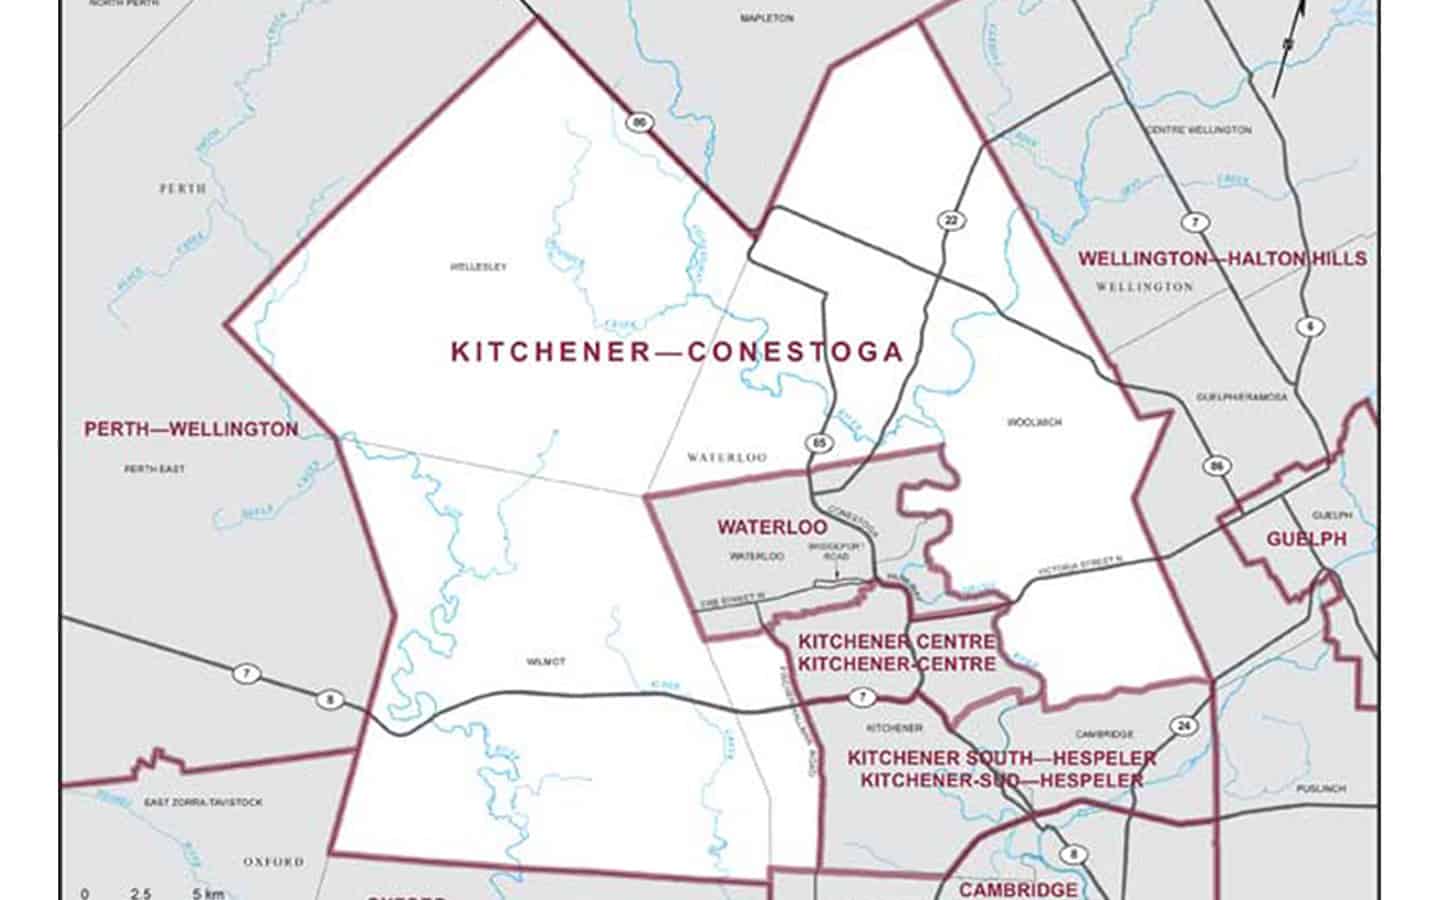 Kitchener-Conestoga too close to call